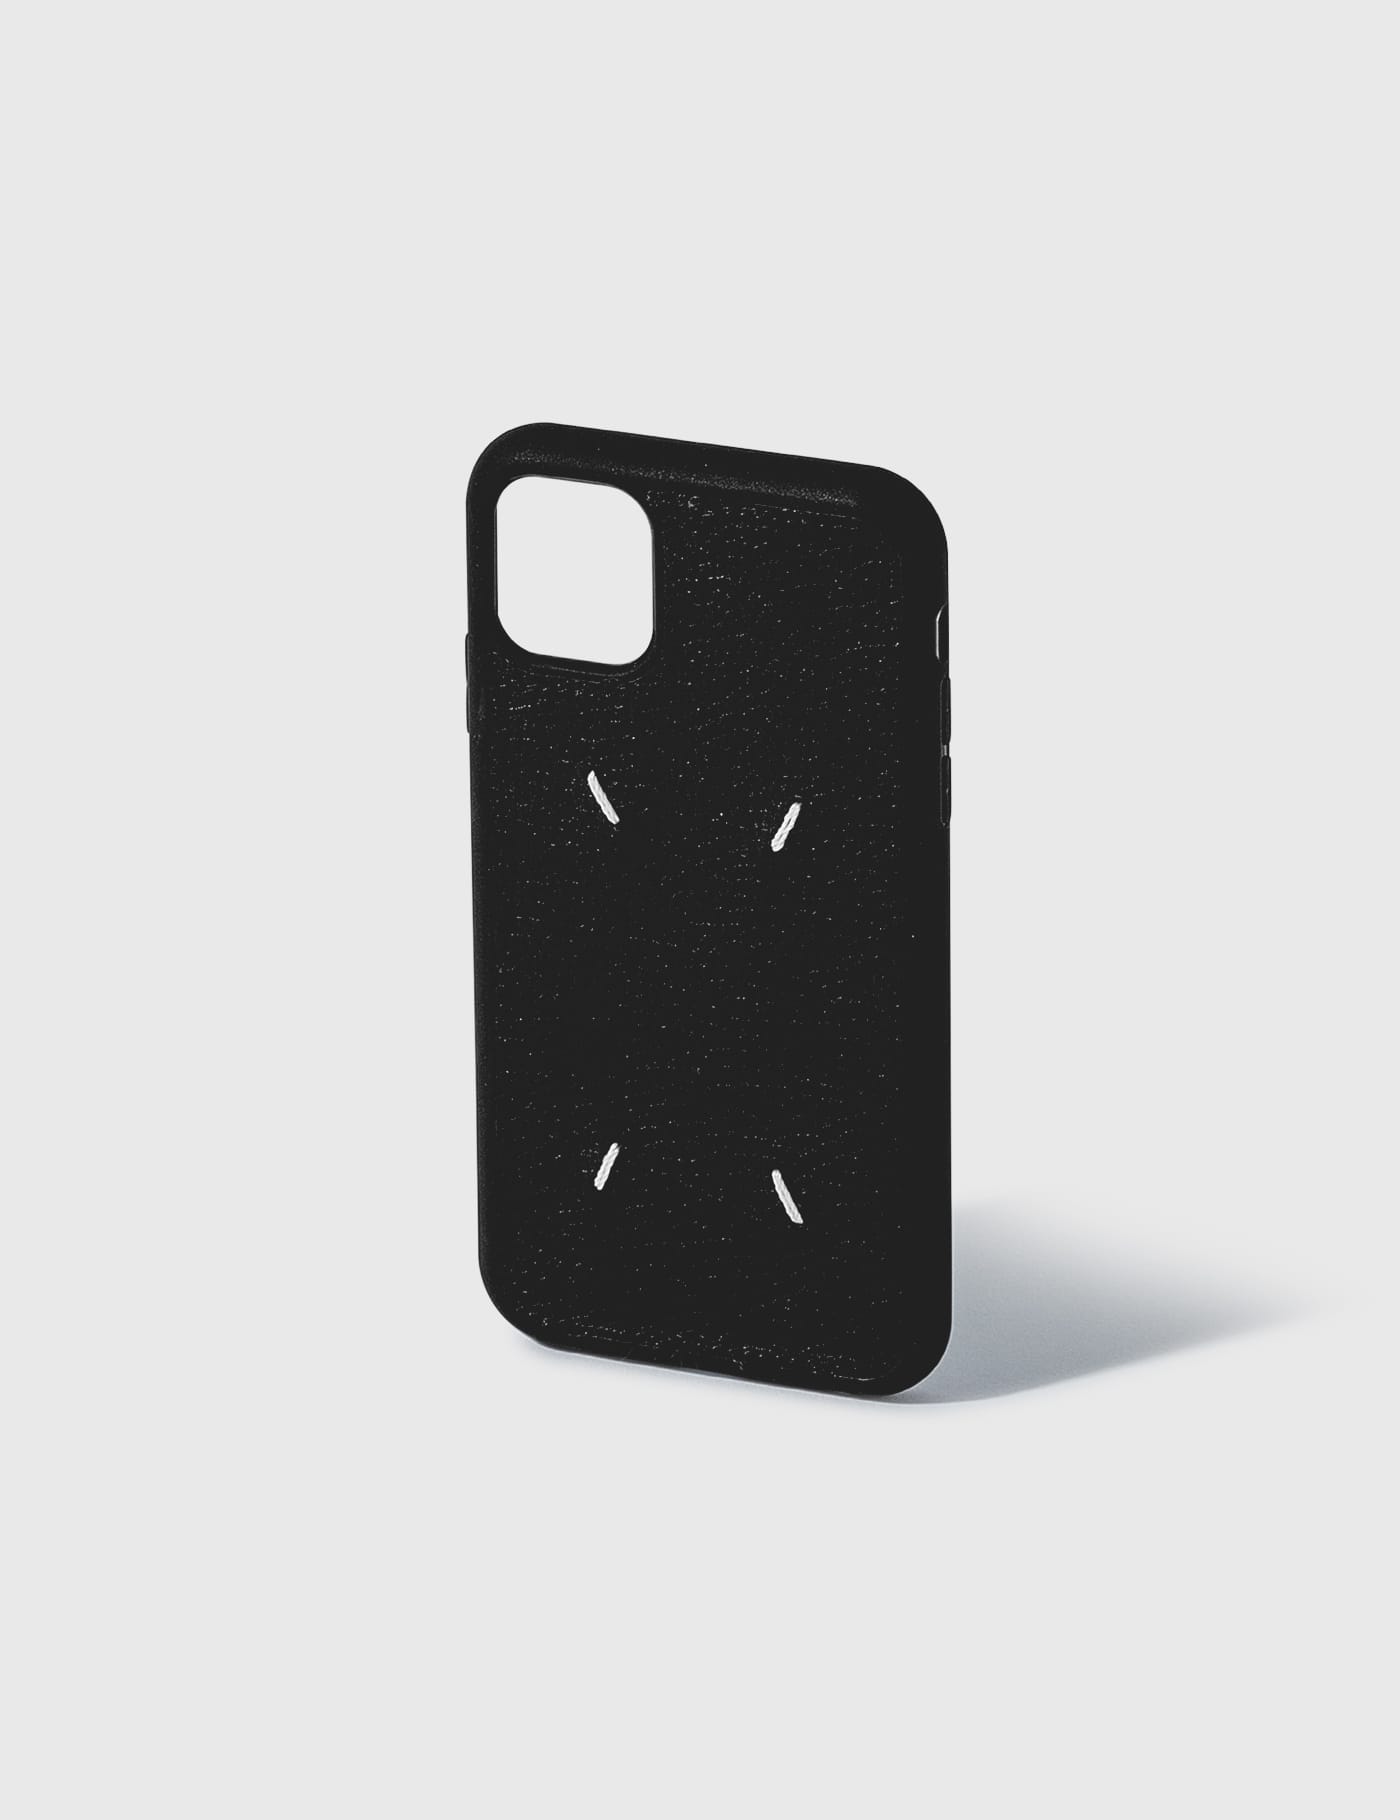 Maison Margiela - iPhone 12 Mini Case | HBX - HYPEBEAST 為您搜羅全球潮流時尚品牌